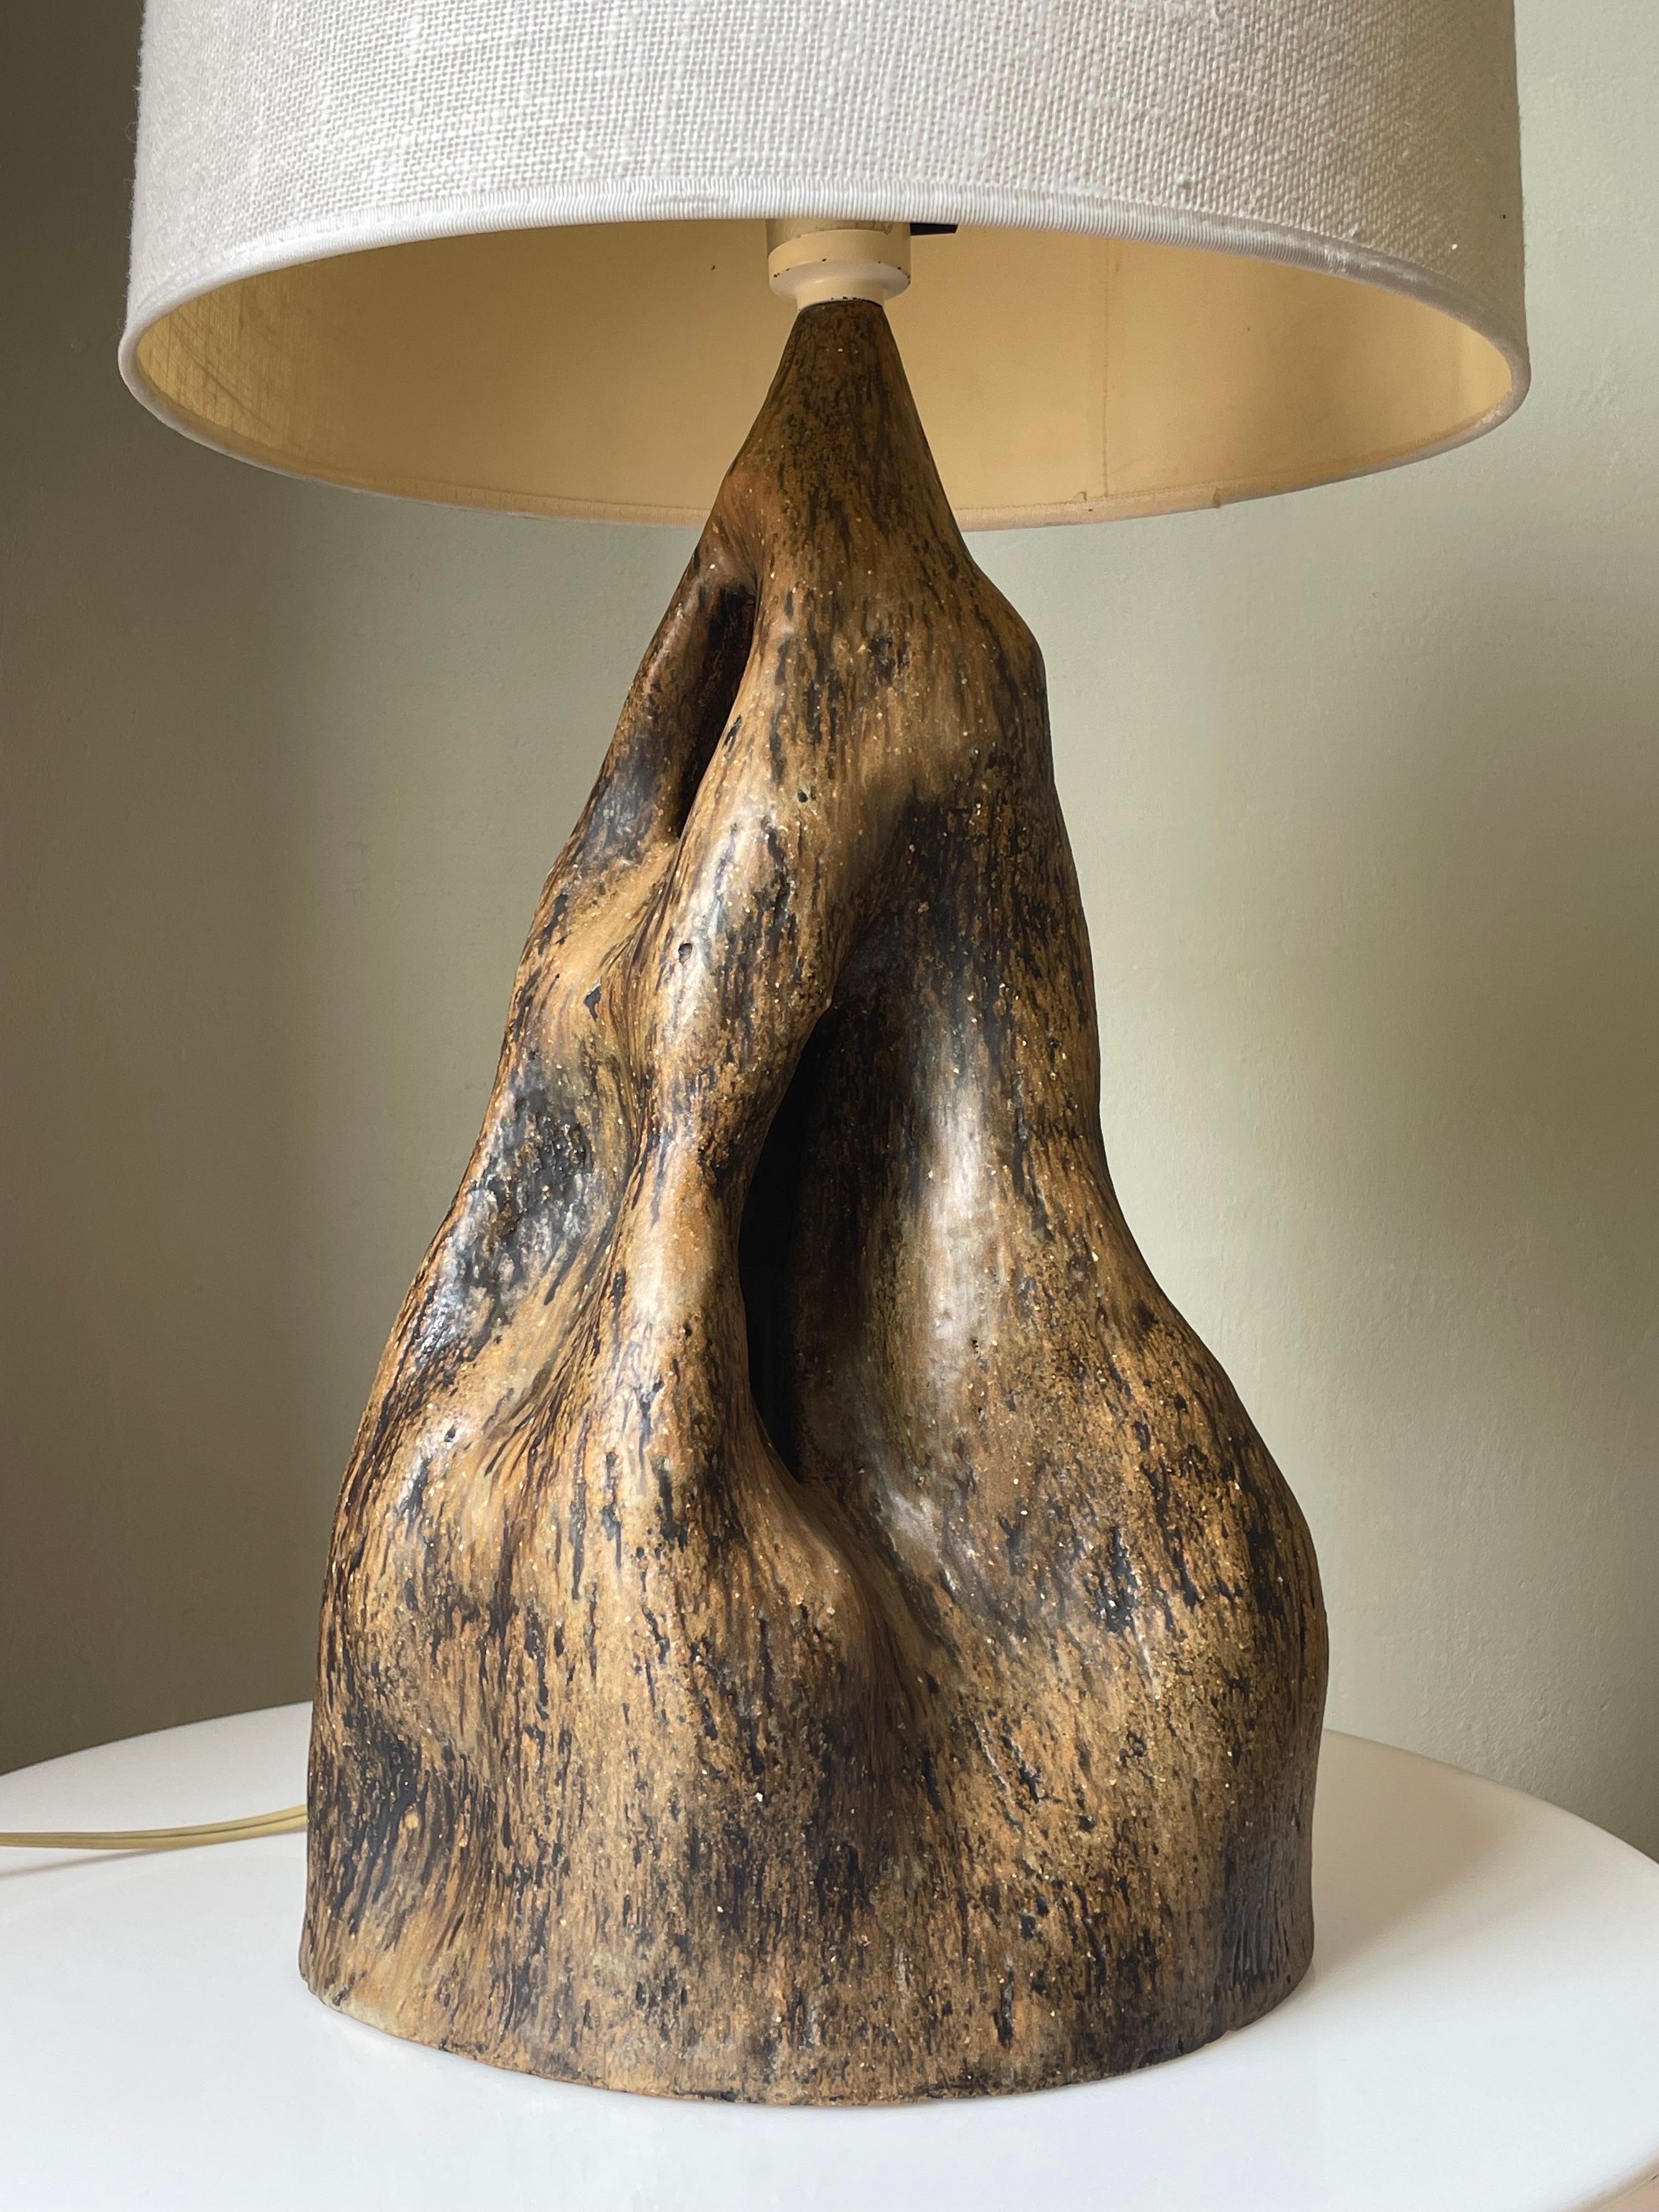 European Monumental Organic Modern Earthcolored Ceramic Art Lamp, 1960s For Sale